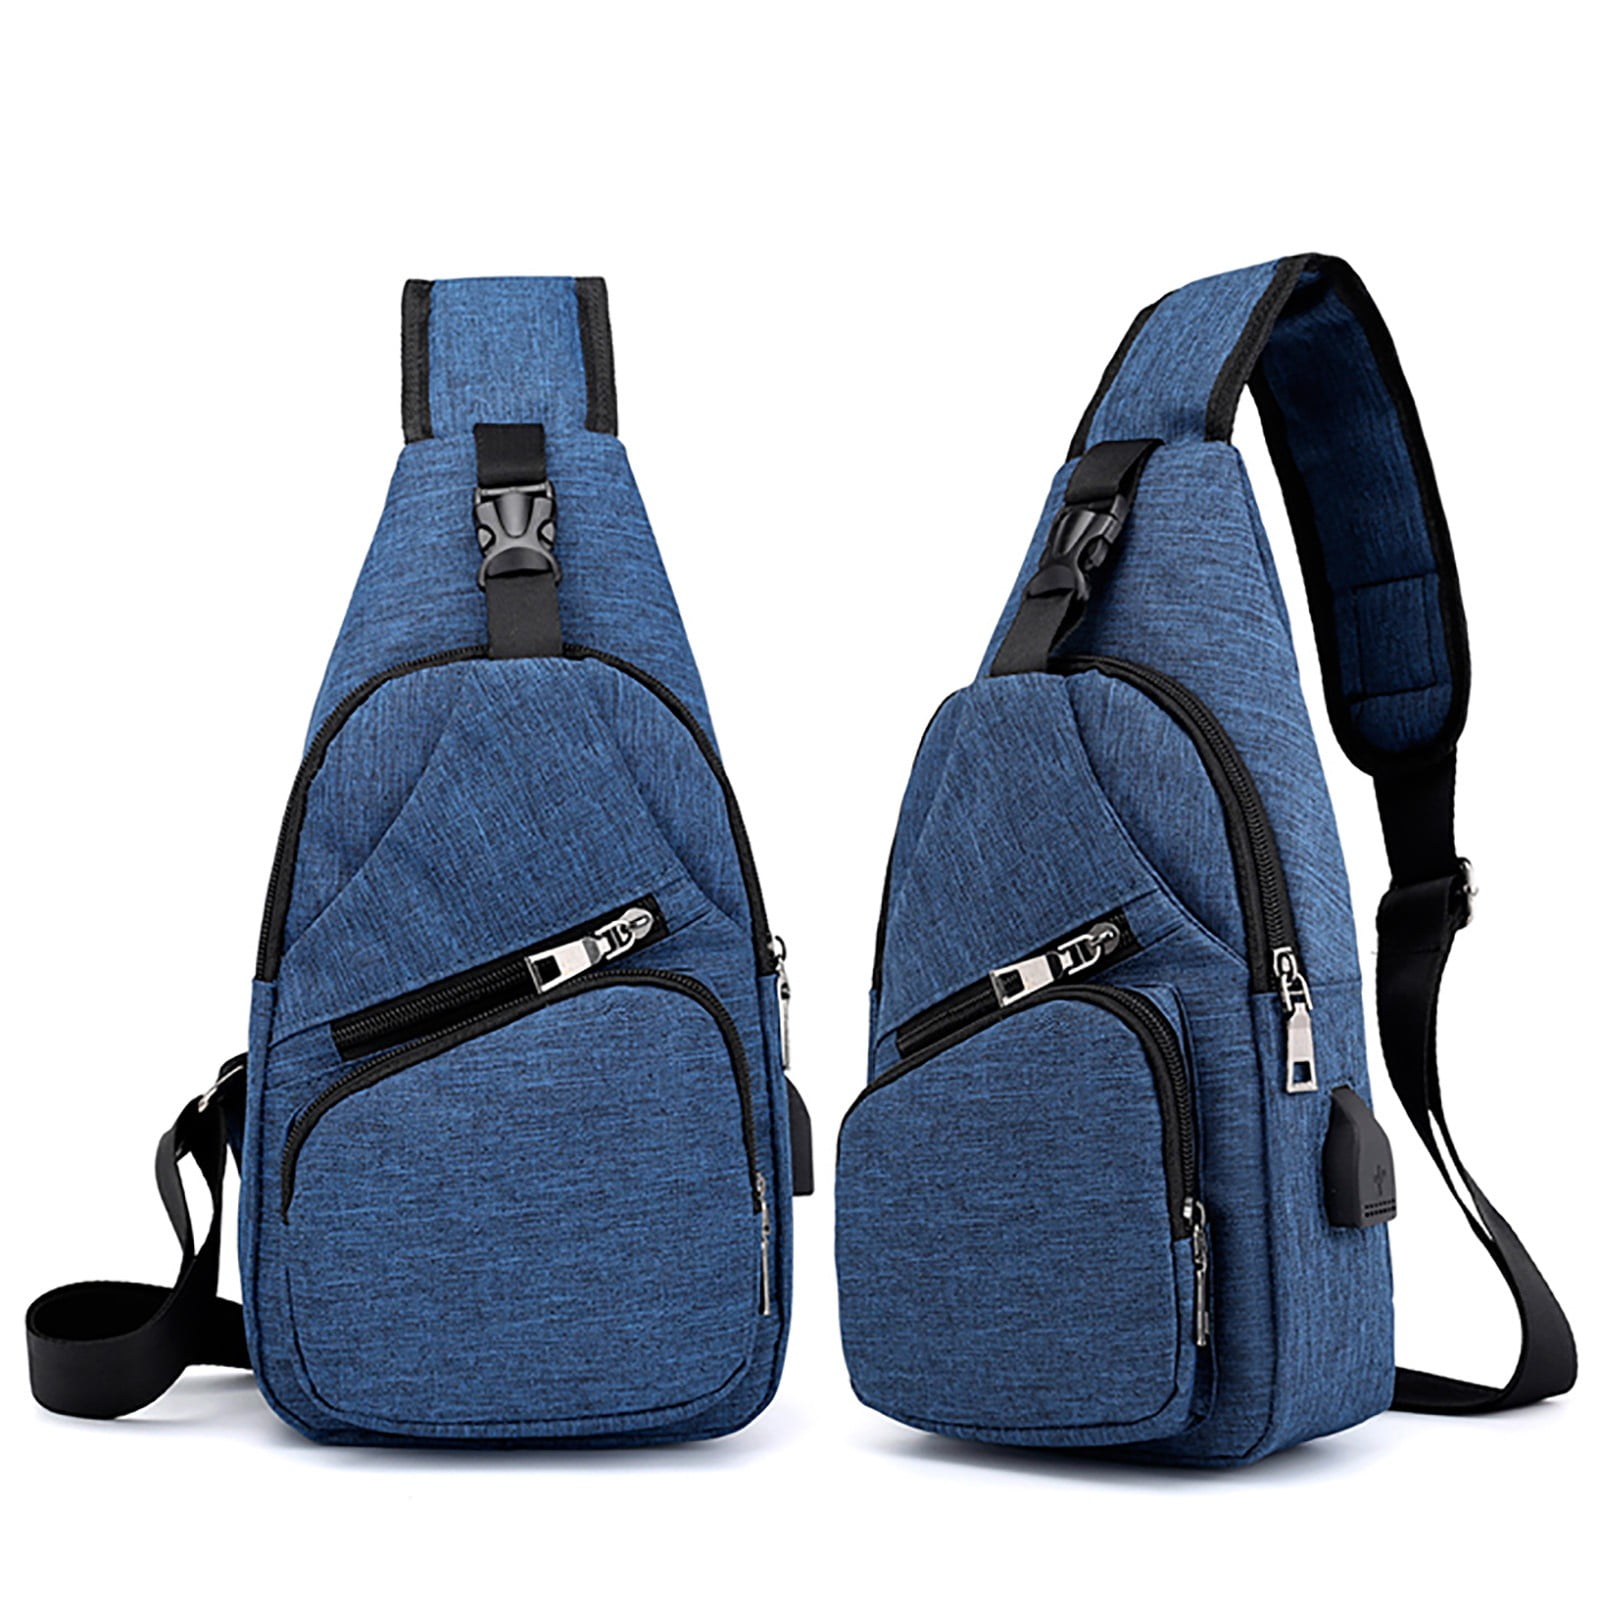 redaica Sling Bag for Women Mens Crossbody Bag, Chest Bag Sling Backpack with USB Charging Port for Walking Hiking